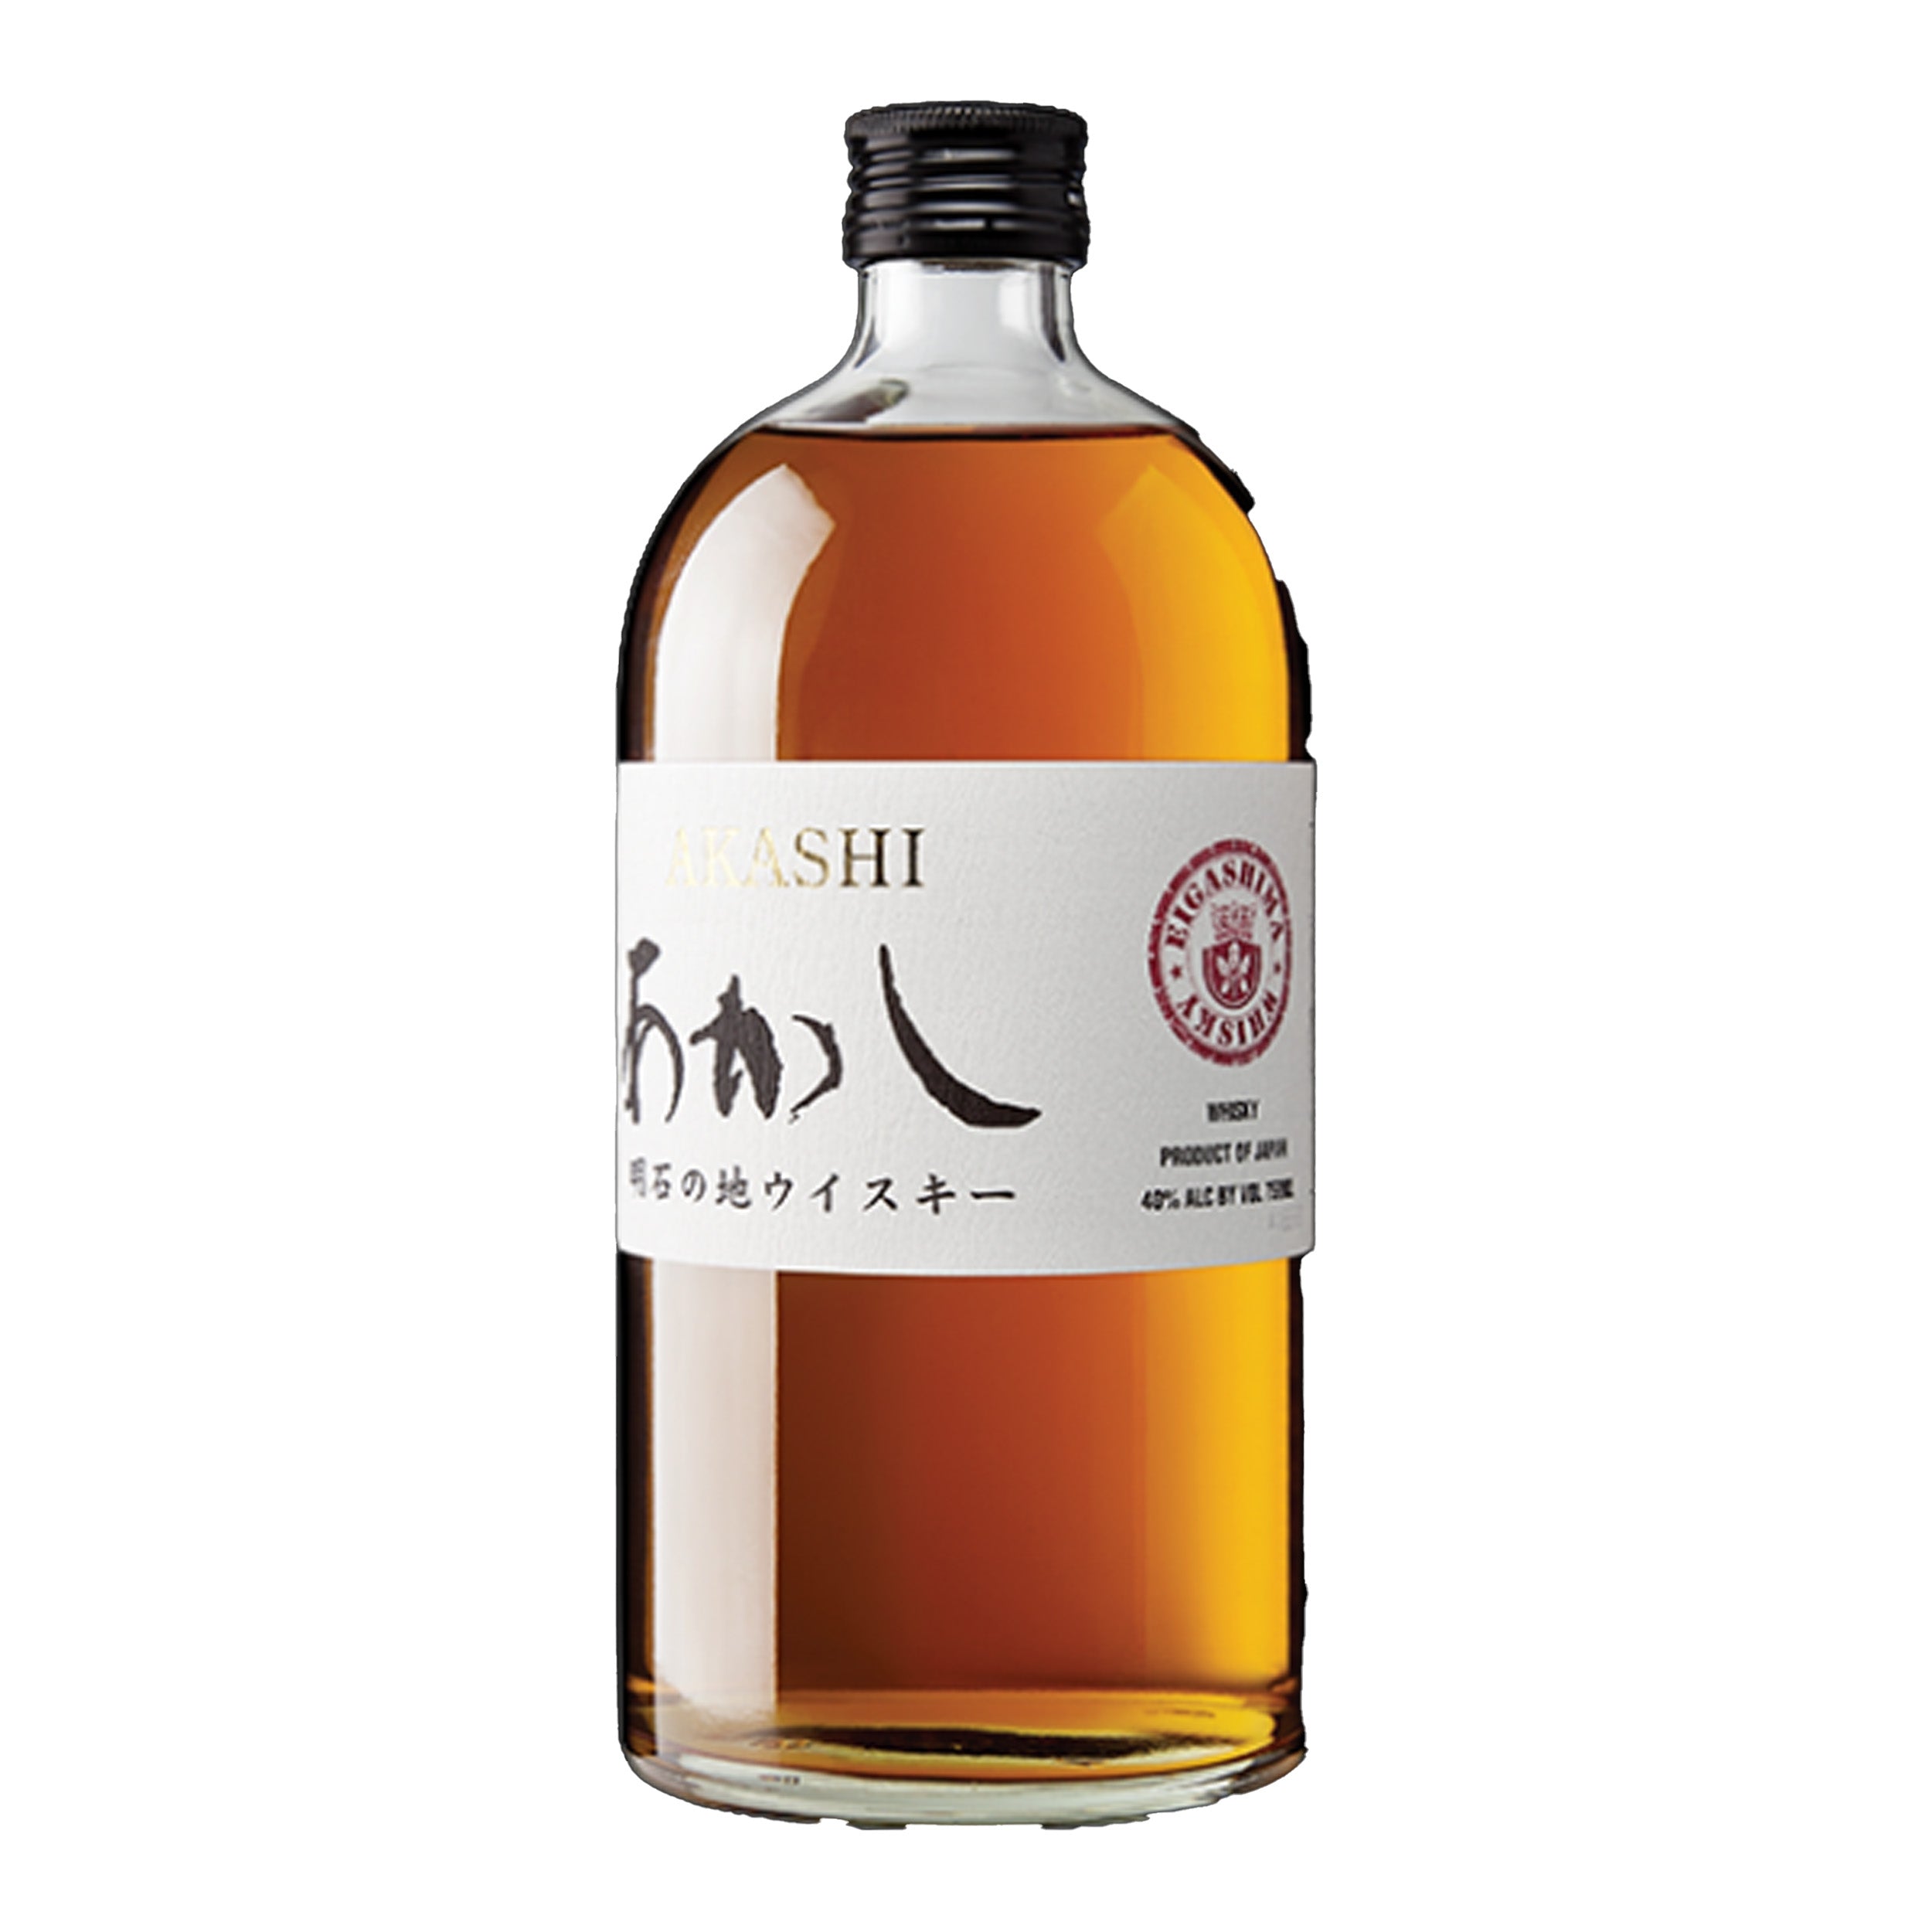 Akashi White Oak Japanese Blended Whisky